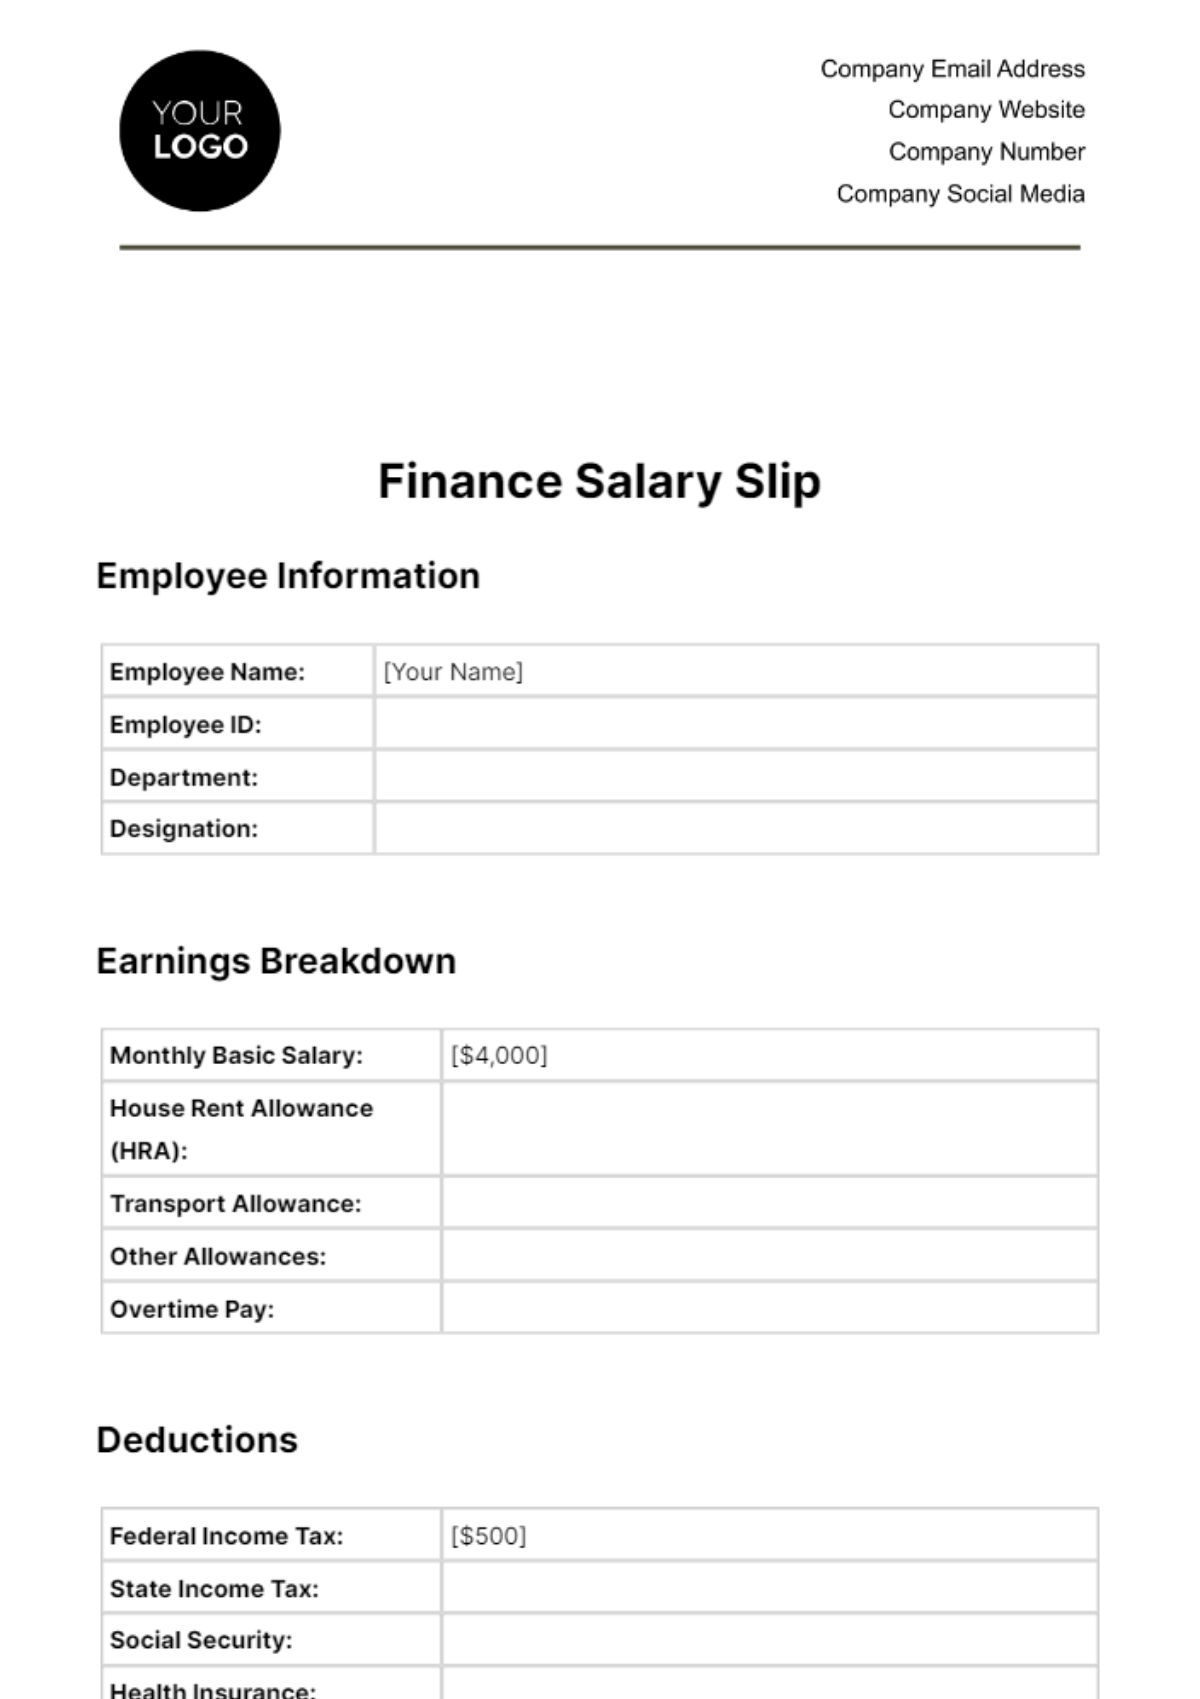 Finance Salary Slip Template